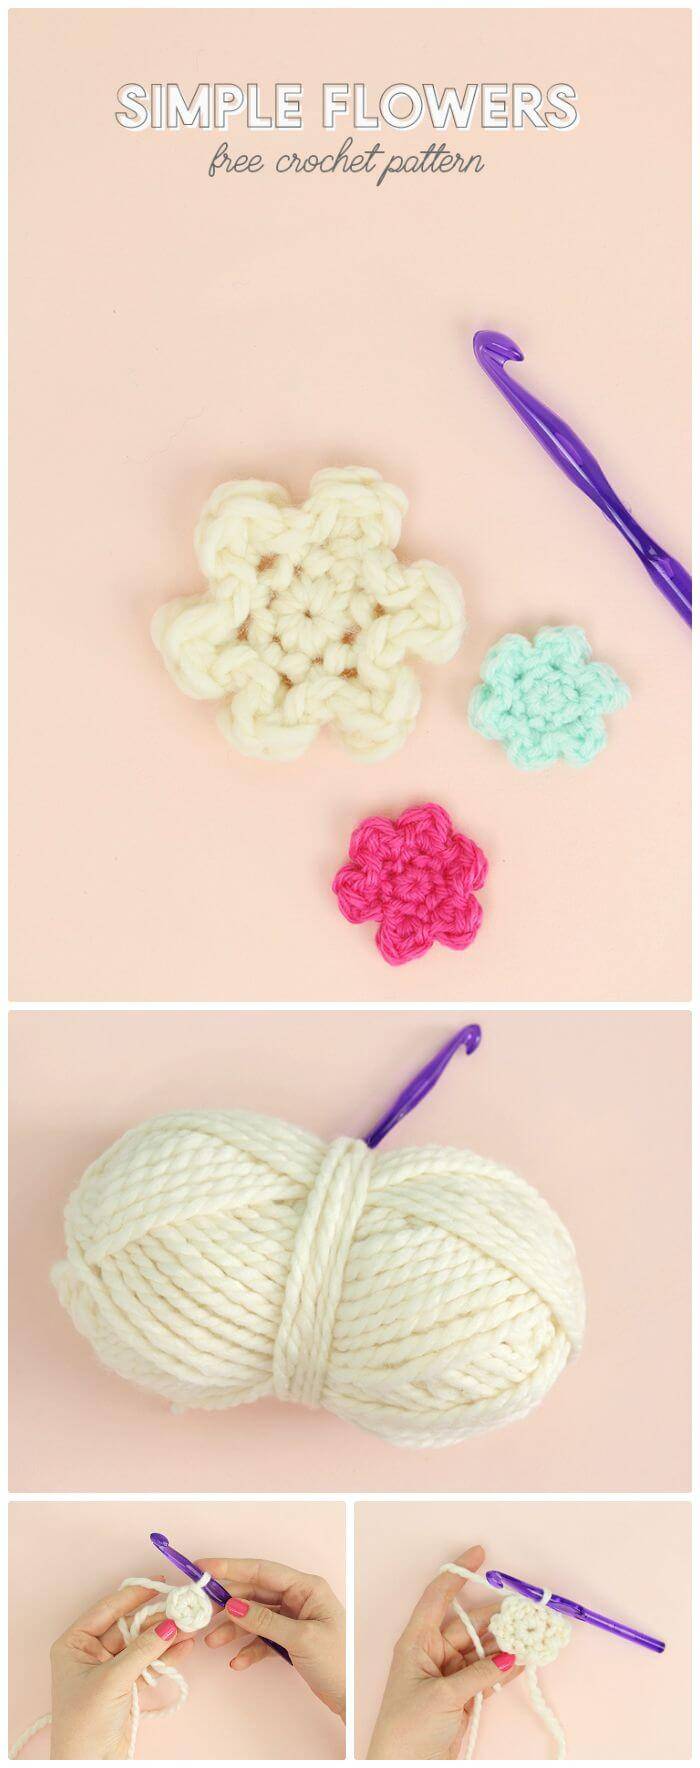 DIY Crochet Flowers Small Simple Flower Pattern, Free crochet flower patterns for crochet lovers!